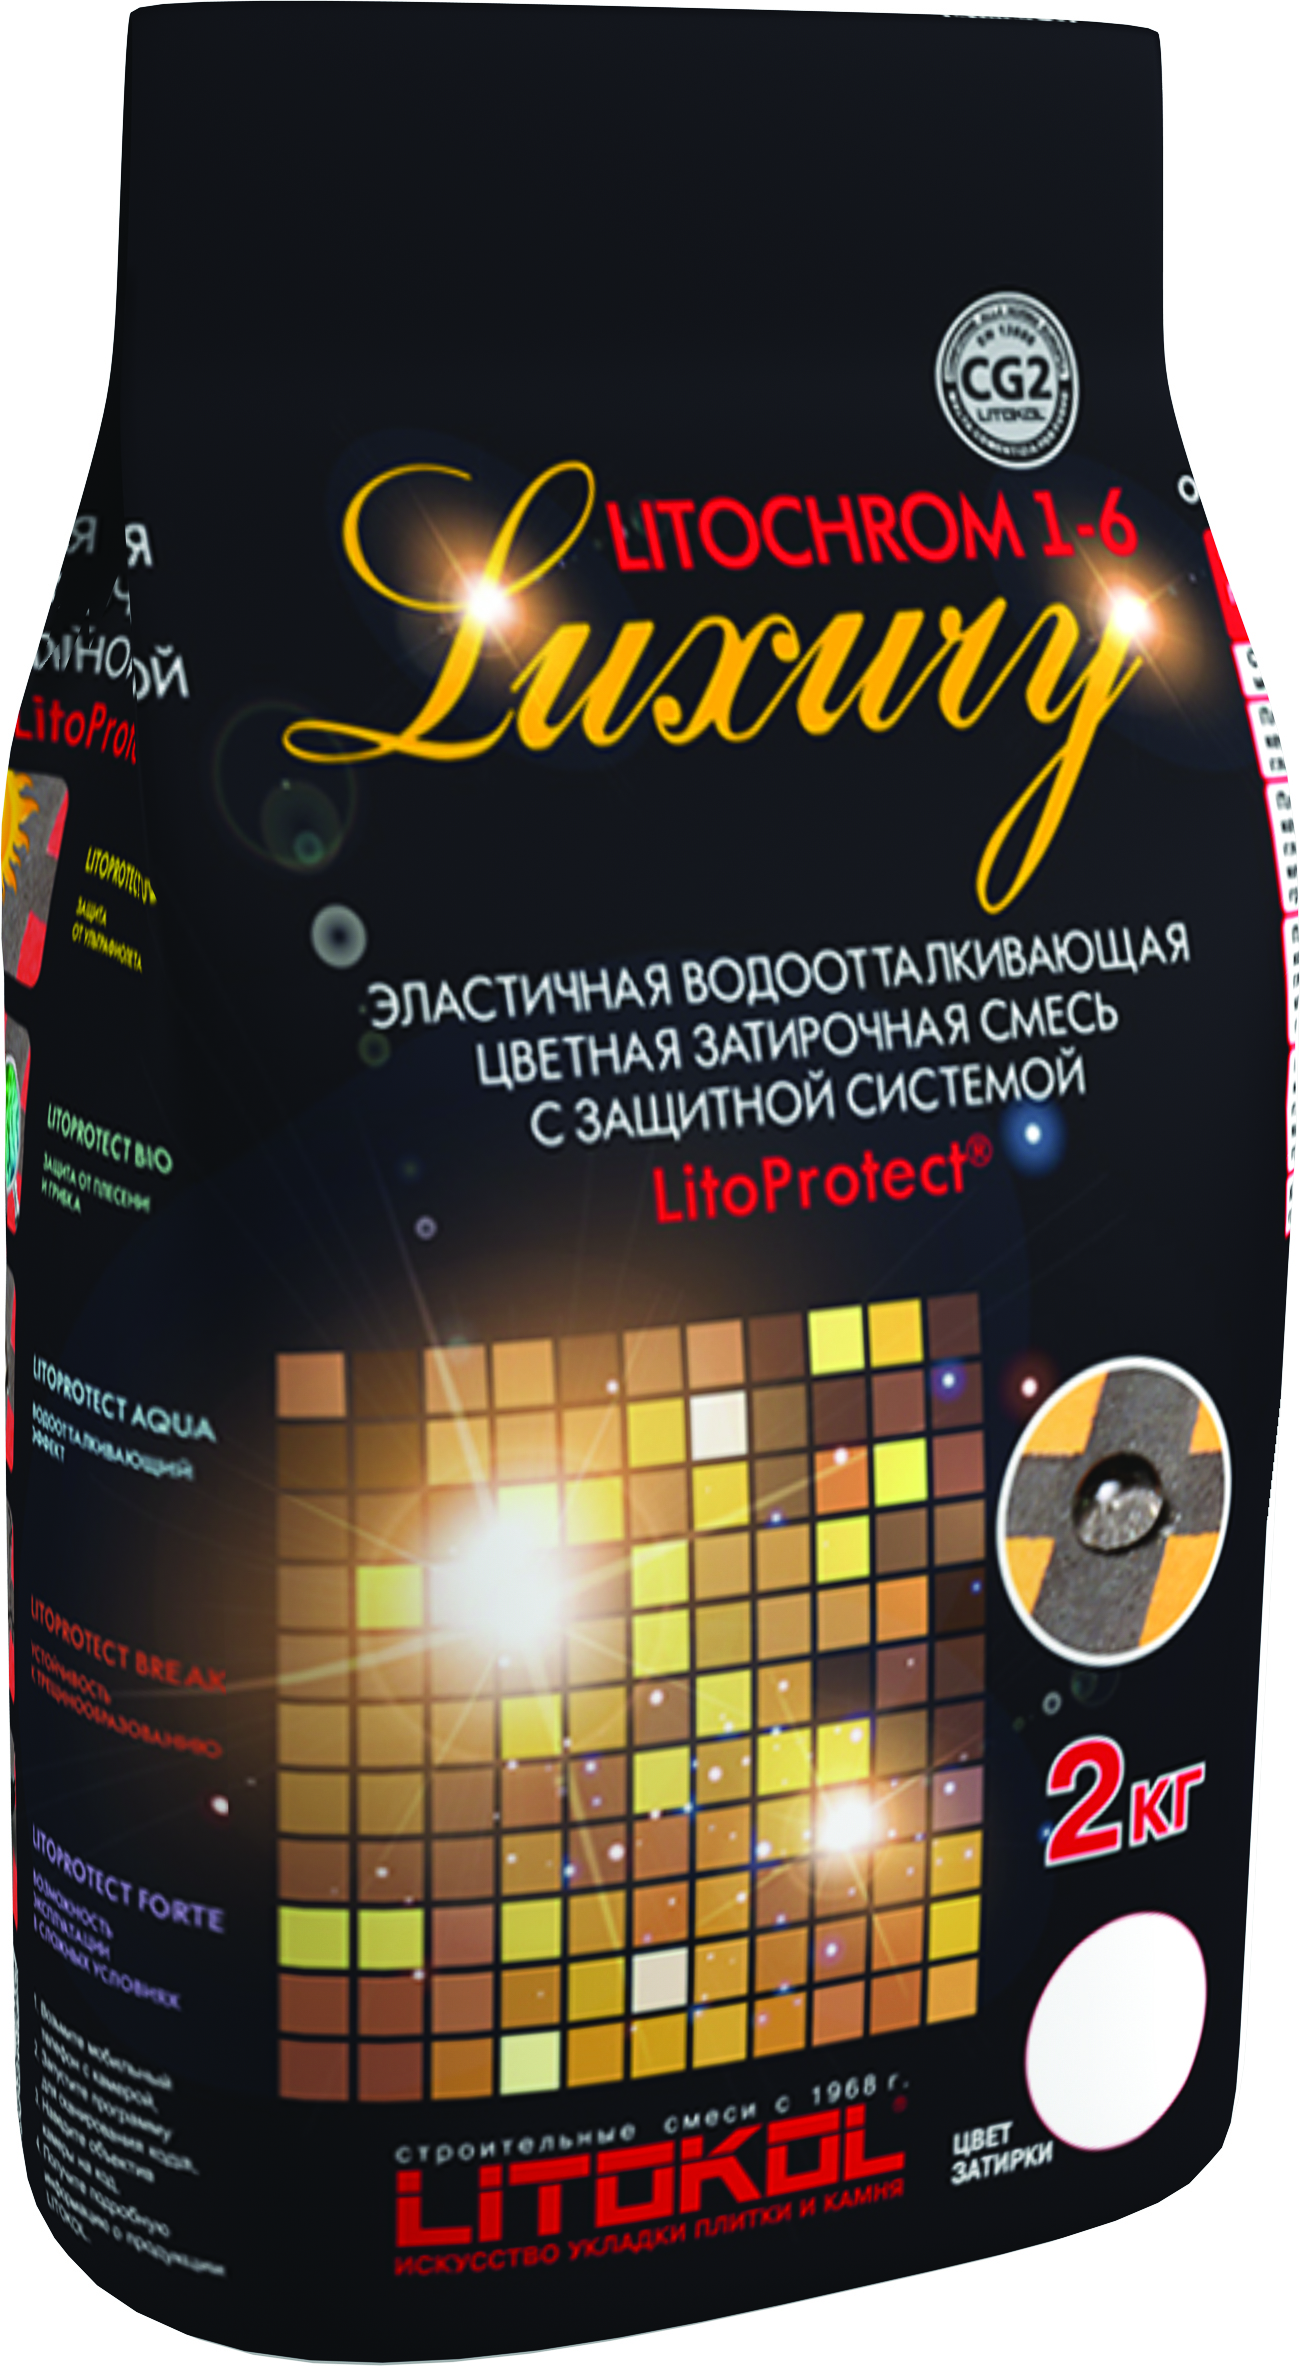 Купить Litokol Litochrom 1-6 Luxury C.190, 2 кг